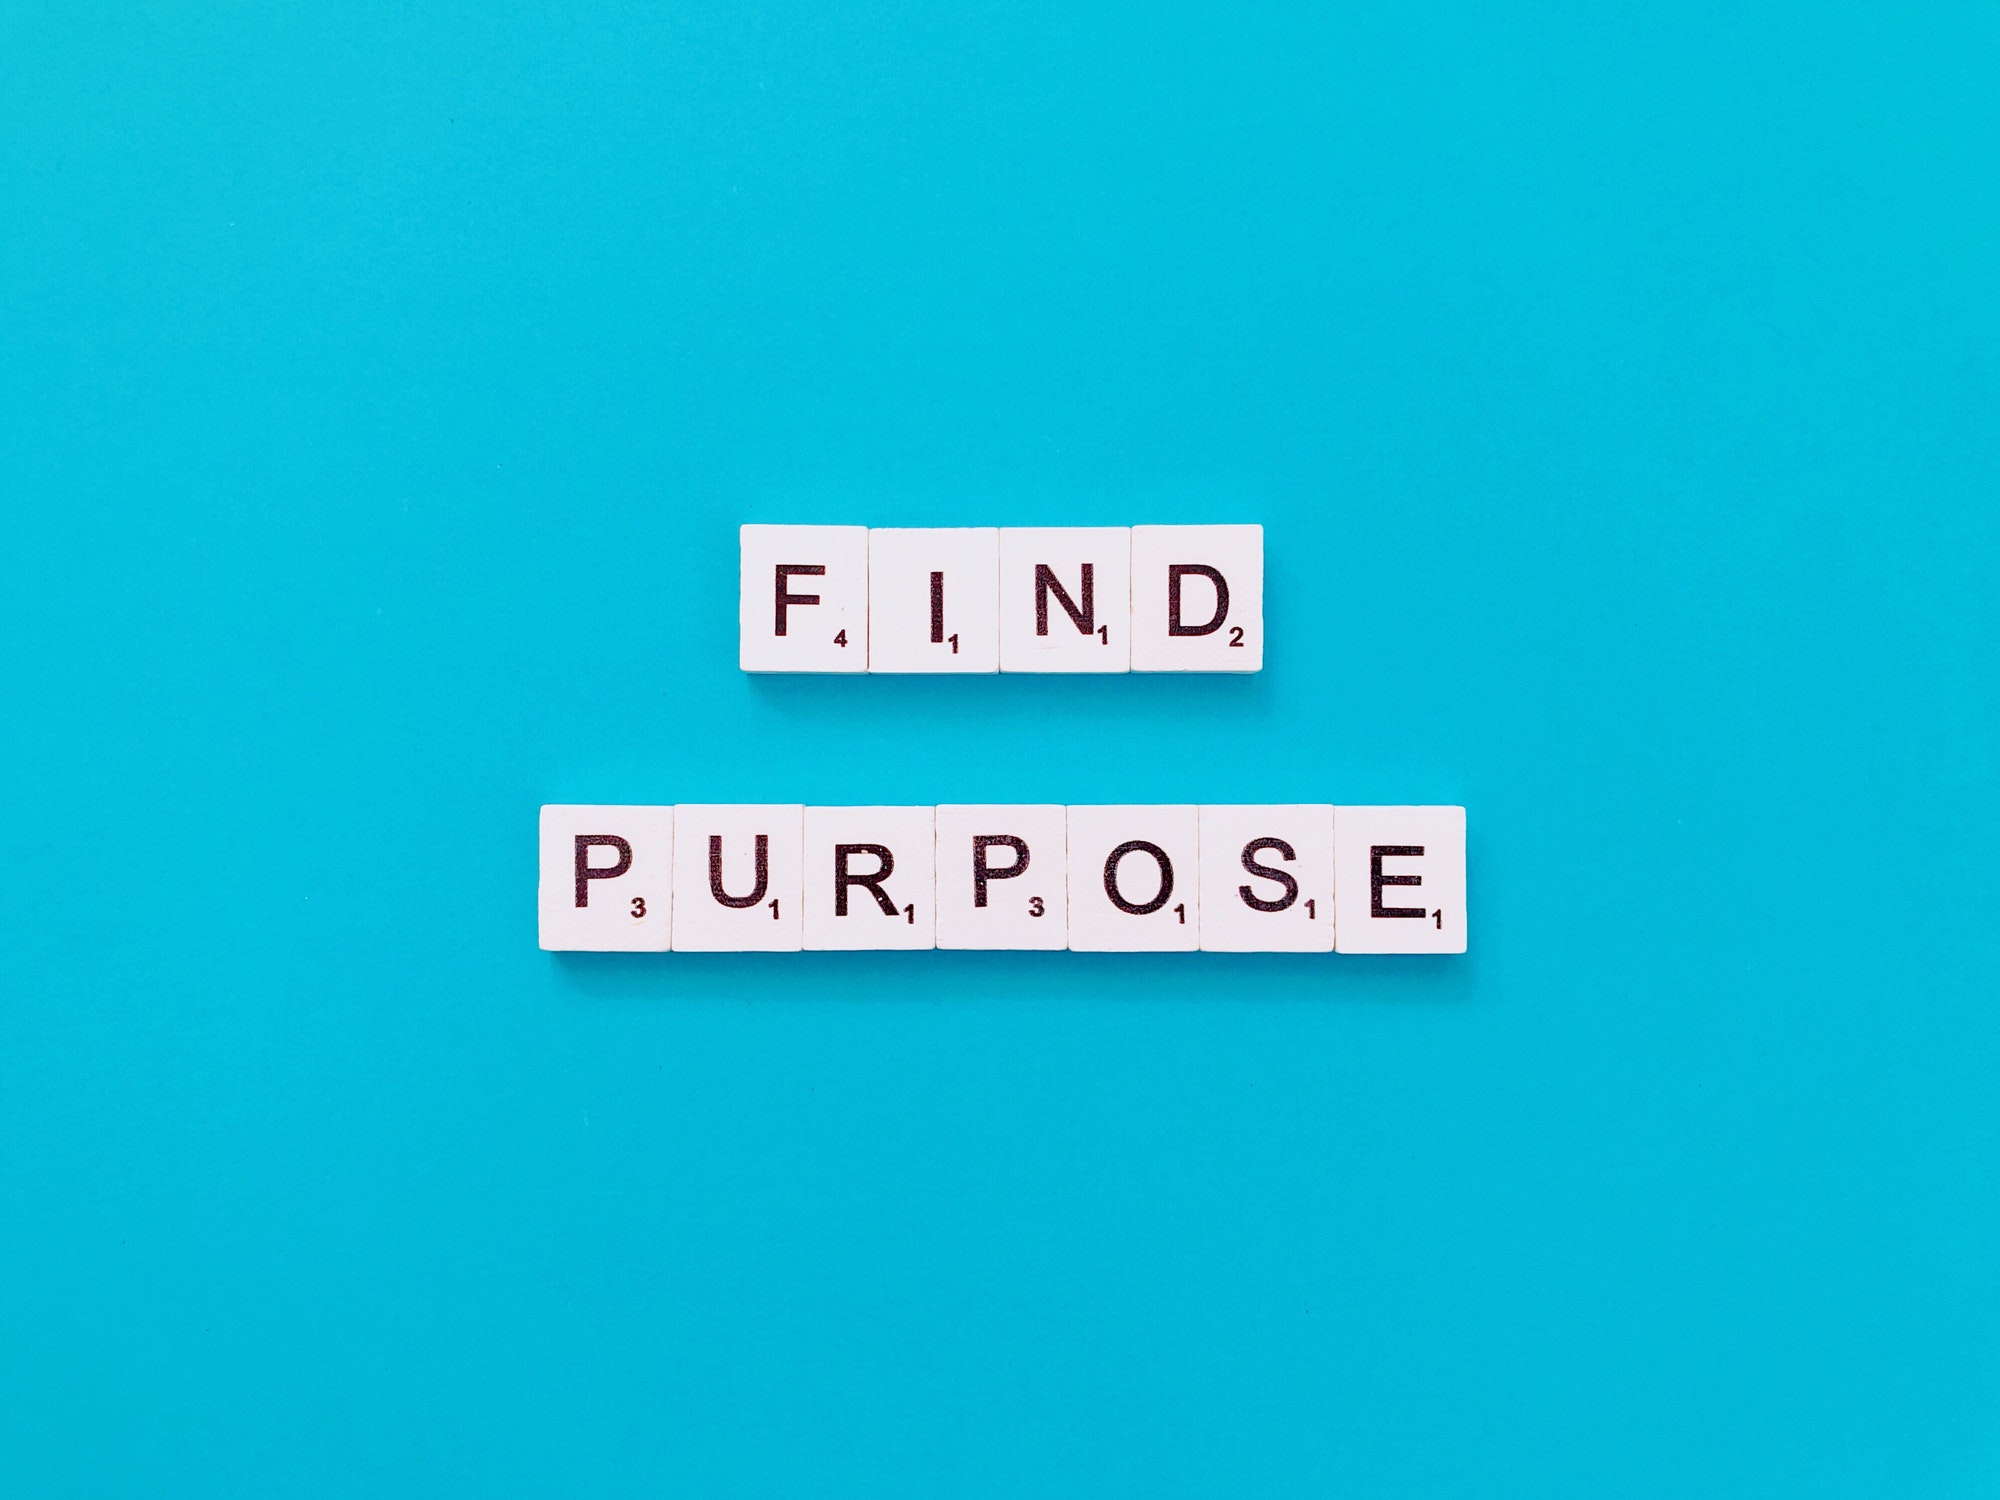 Find purpose